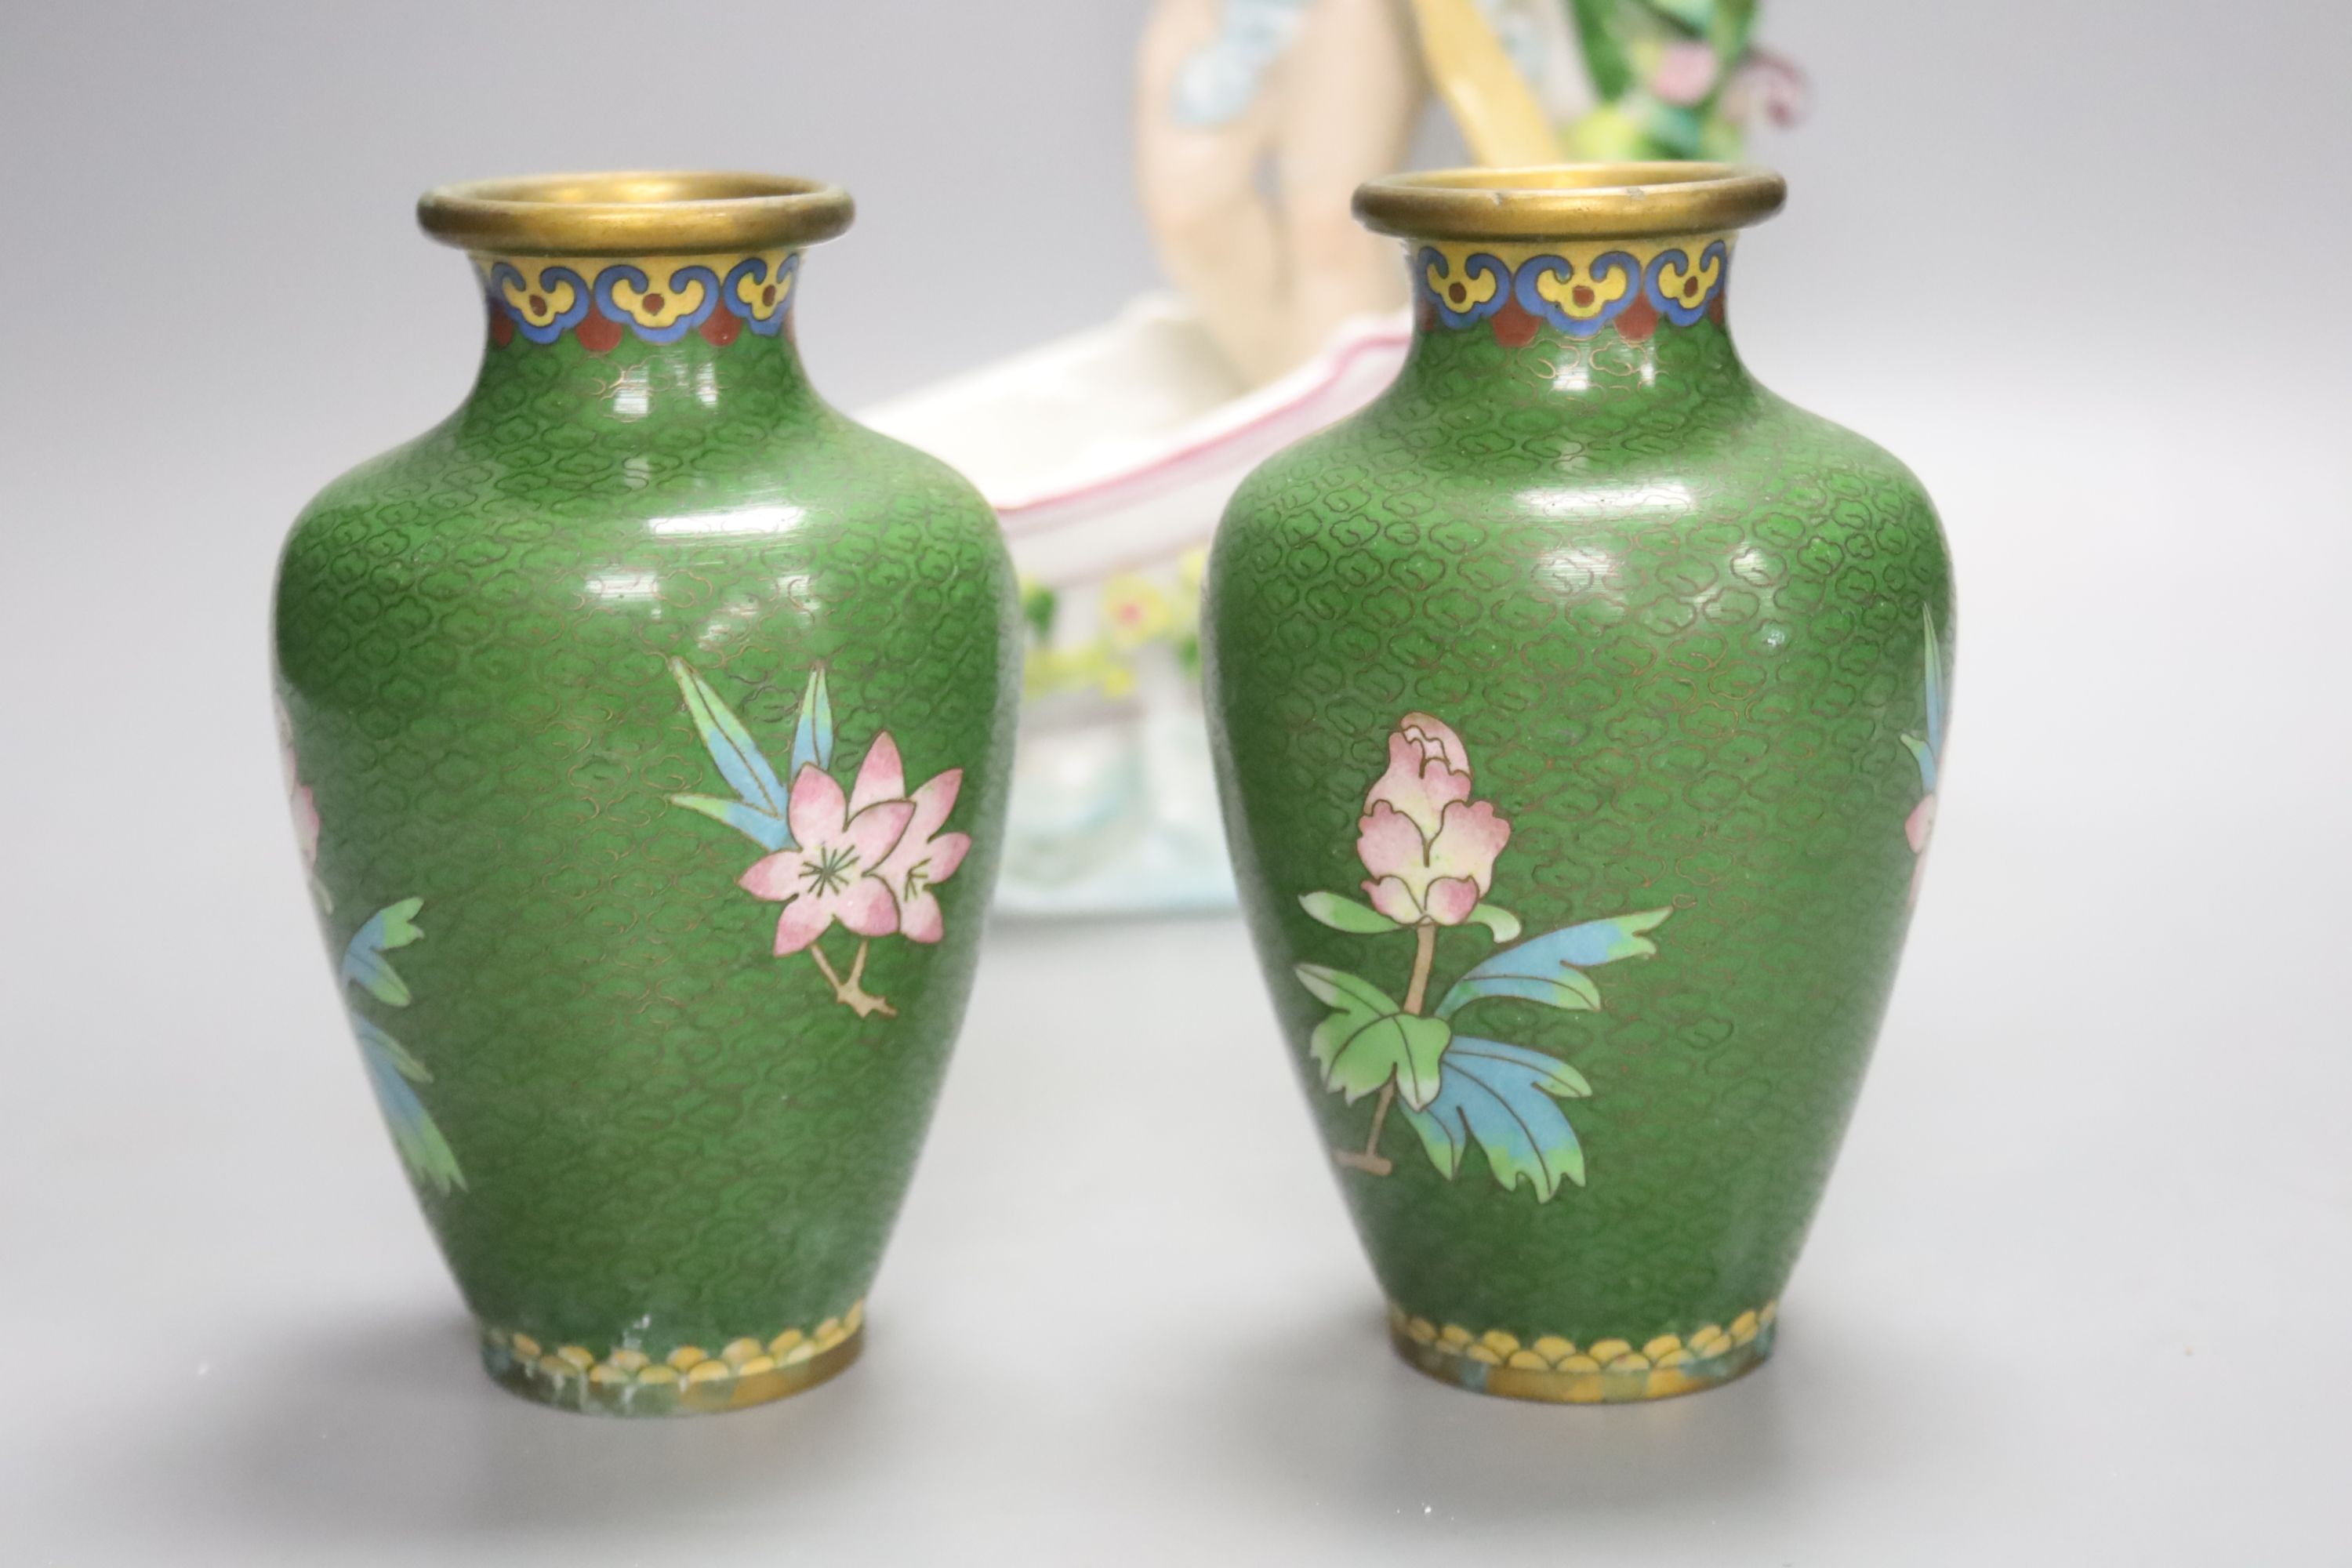 A Meissen style porcelain trinket box, a Royal Copenhagen vase, 9cm high, a cherub vase, 25cm high, and a pair of Chinese cloisonne enamel vases, 13cm high